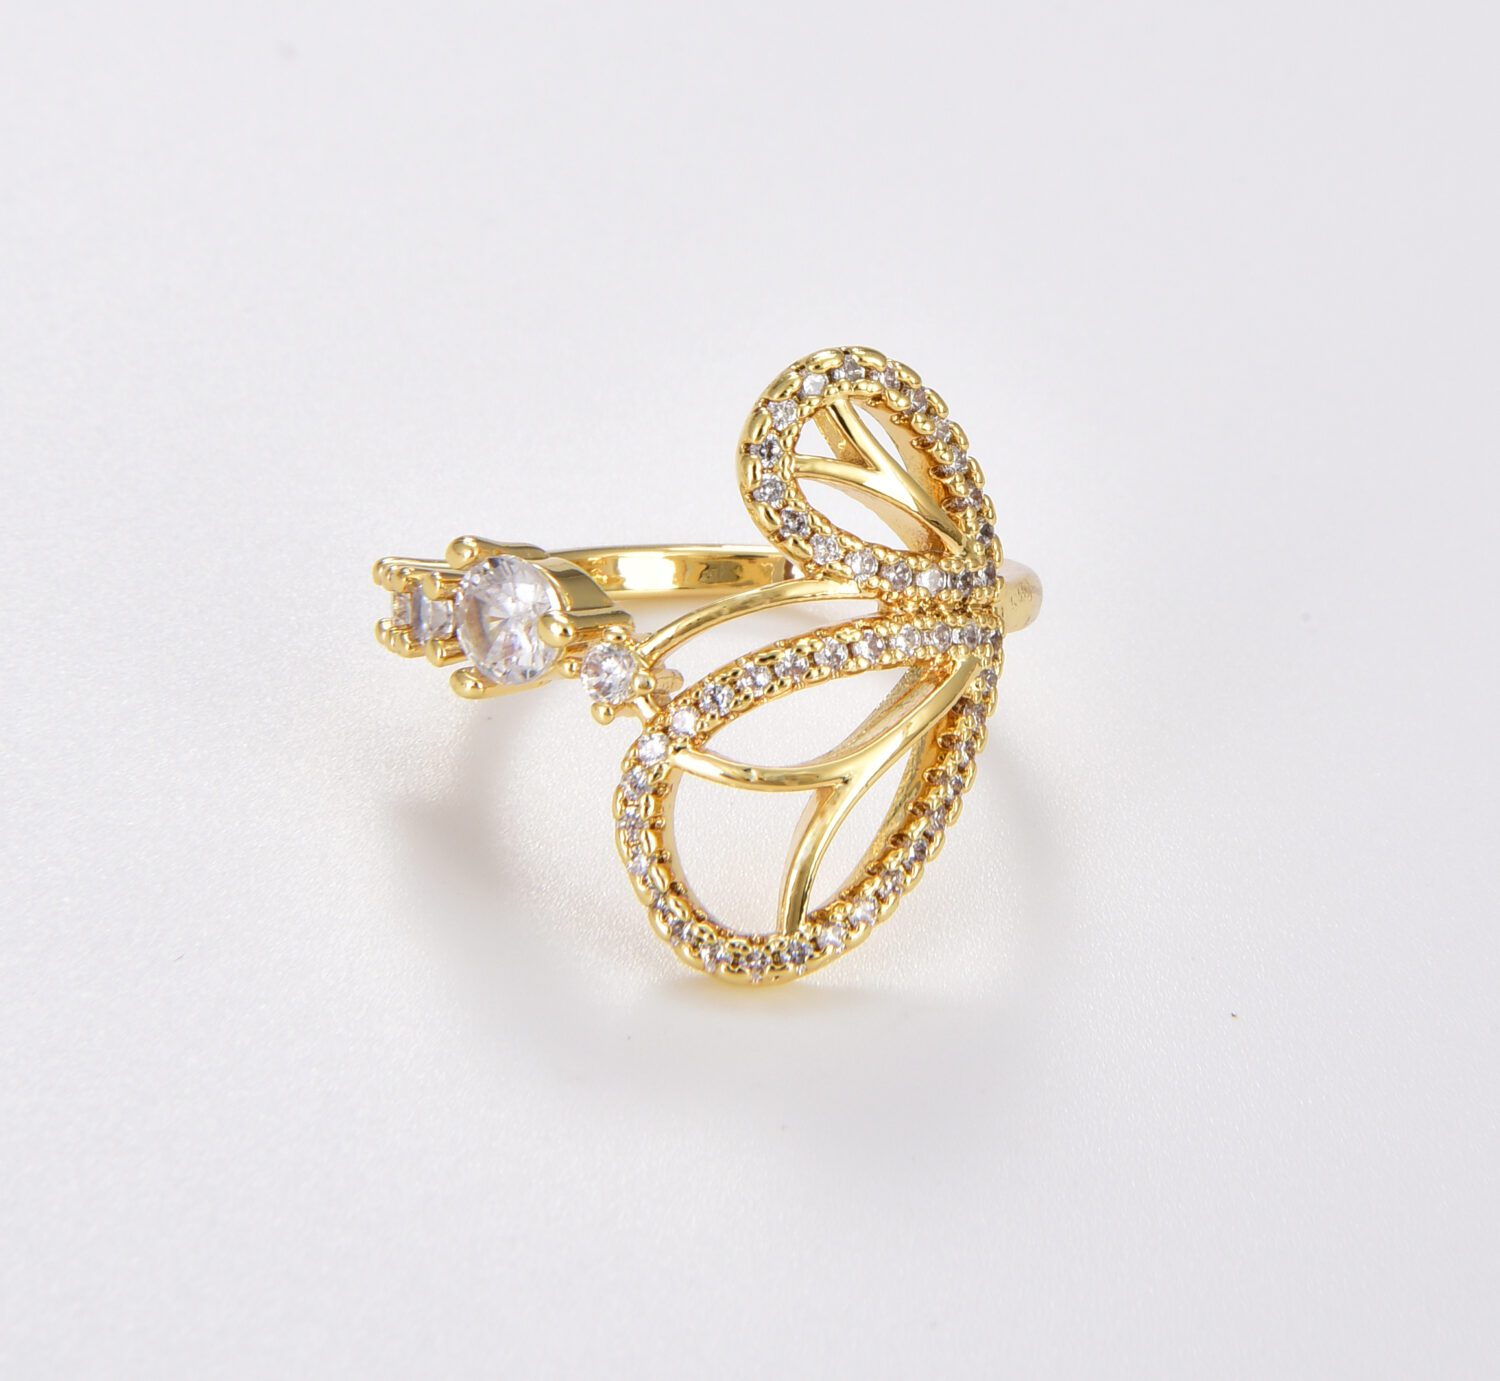 Gold Rings Designs Girls | Girls Adjustable Gold Ring | Girls Rings Heart  Shape - Gold - Aliexpress